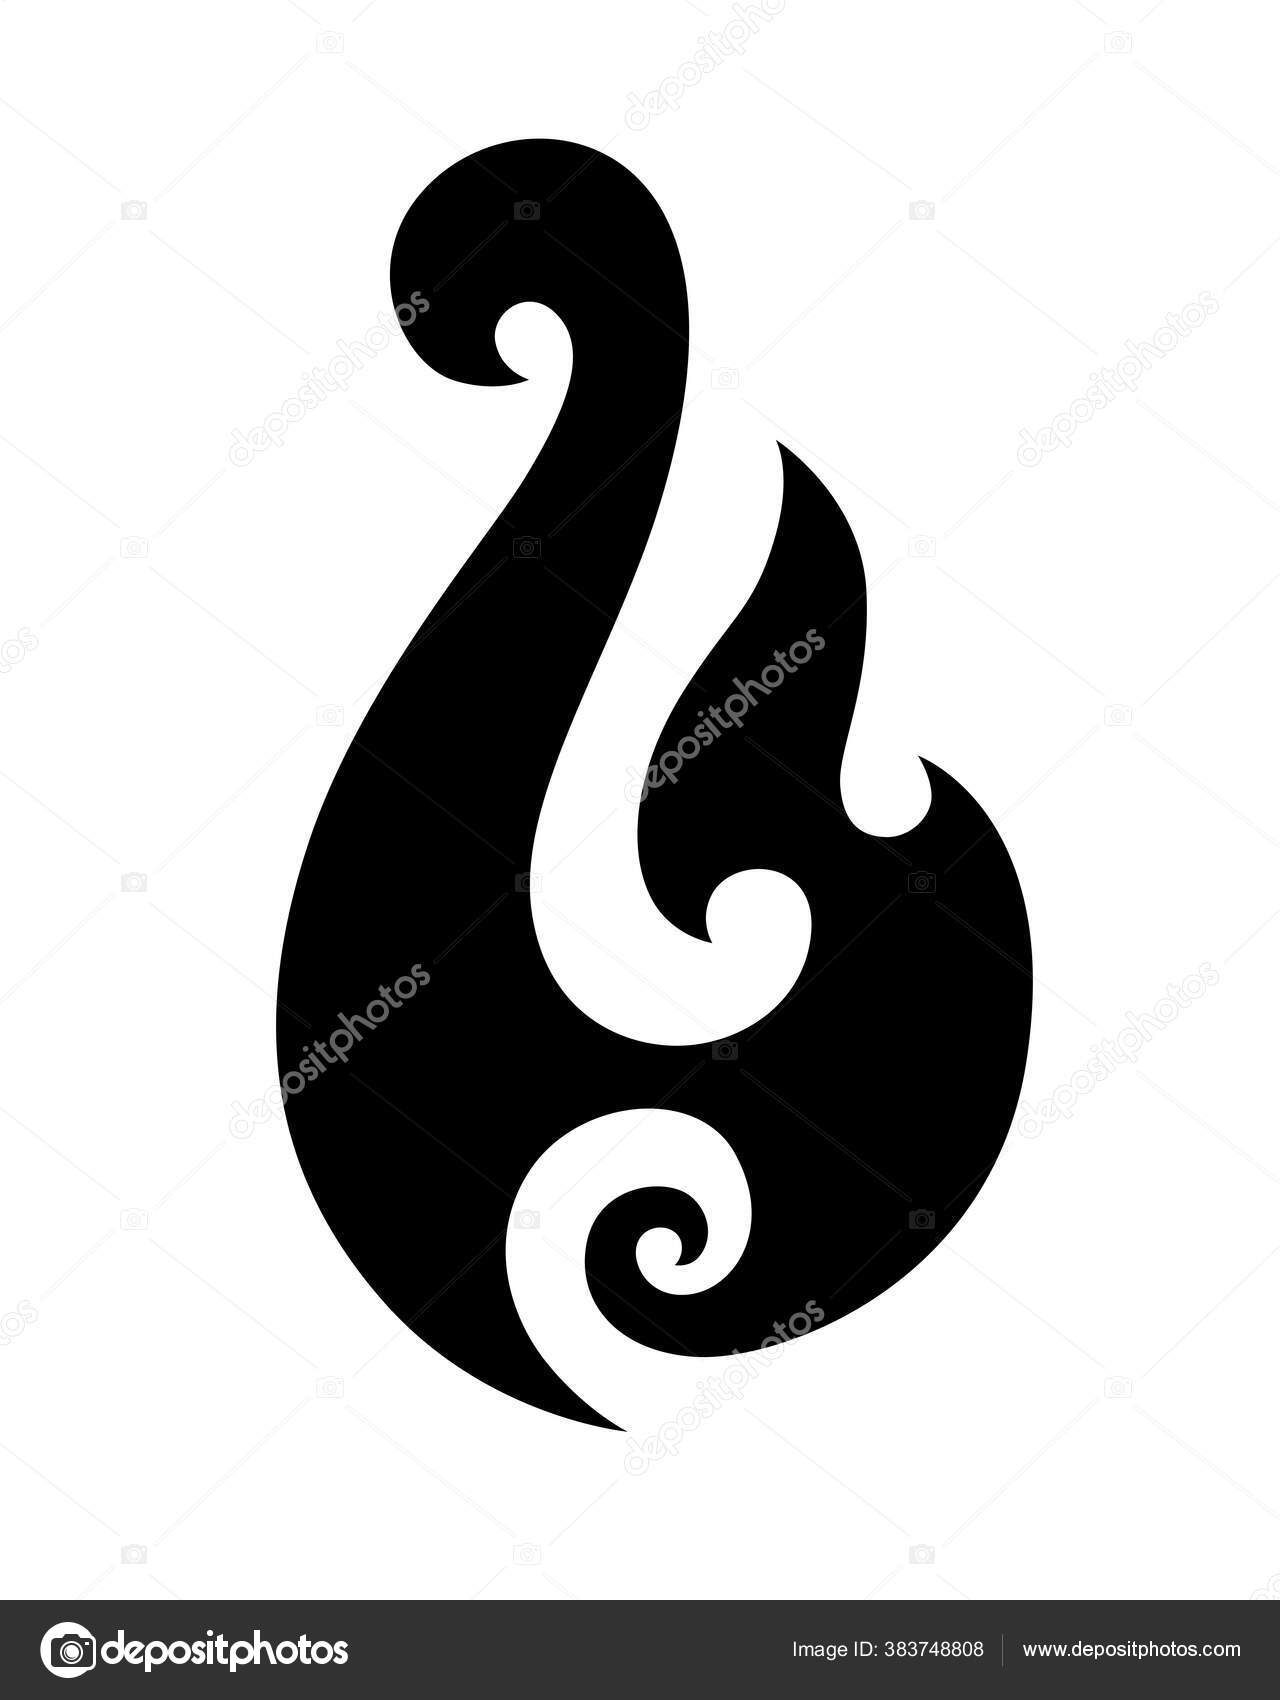 https://st4.depositphotos.com/26196362/38374/v/1600/depositphotos_383748808-stock-illustration-maori-tattoo-style-fish-hook.jpg